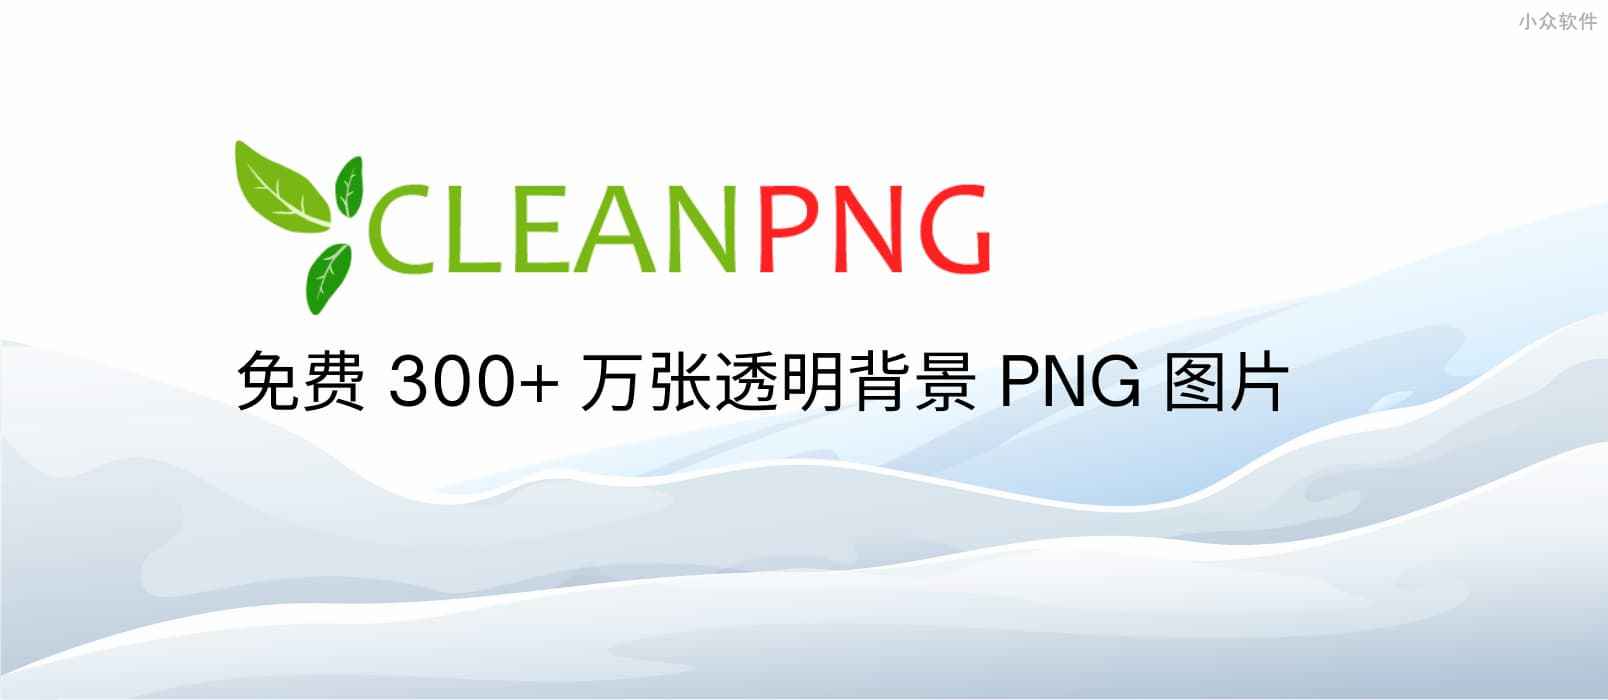 CleanPNG – 超过 300 万张 PNG 格式的透明背景图片库，个人用户可免费使用